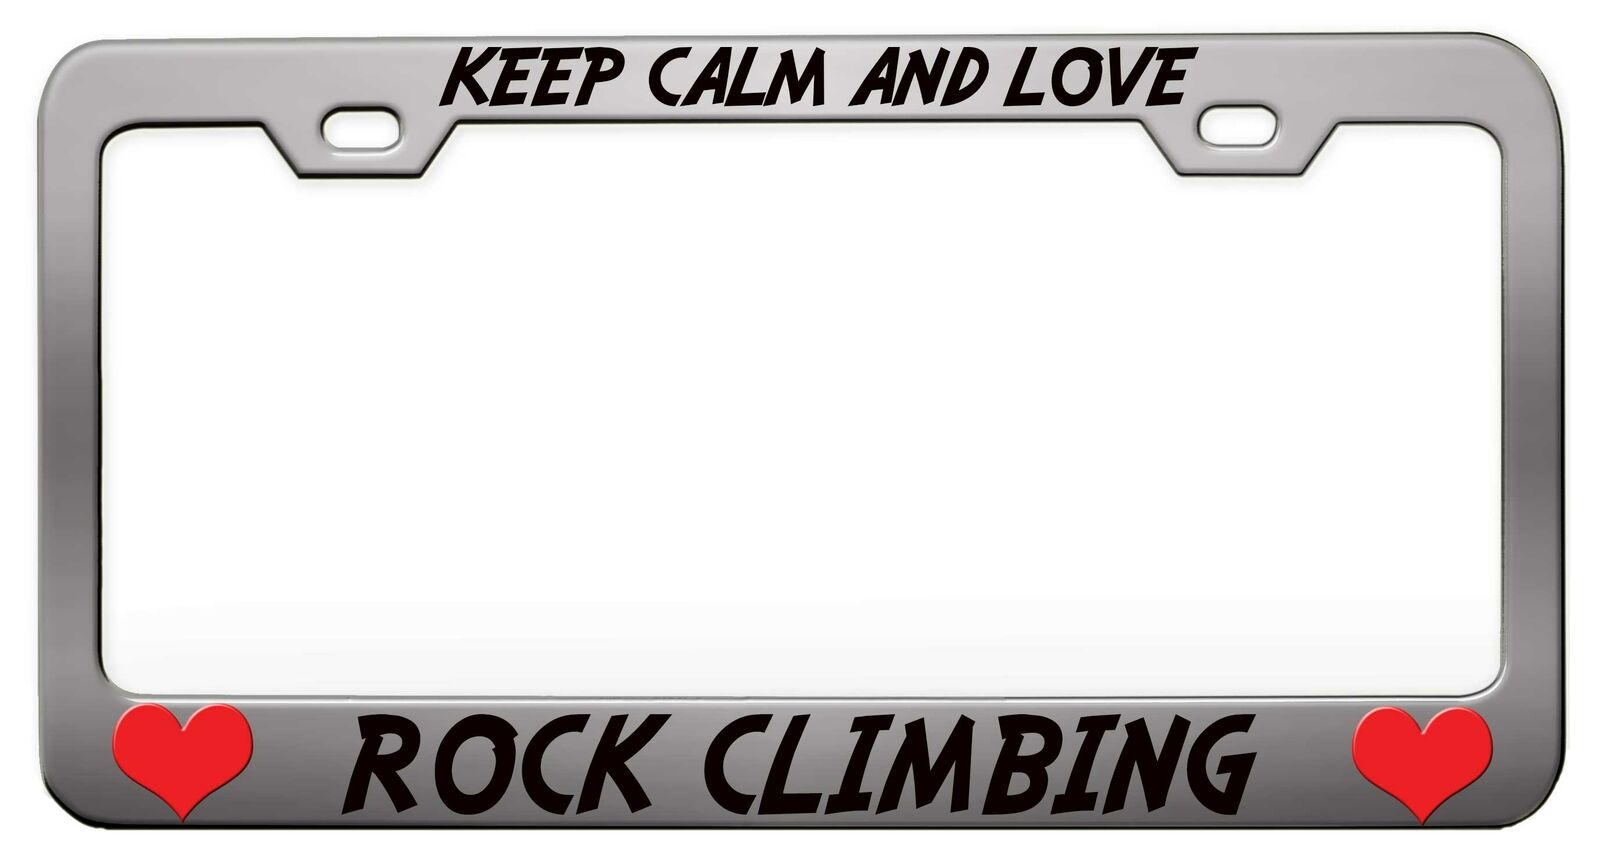 KEEP CALM AND LOVE ROCK CLIMBING Steel License Plate Frame Car SUV U2